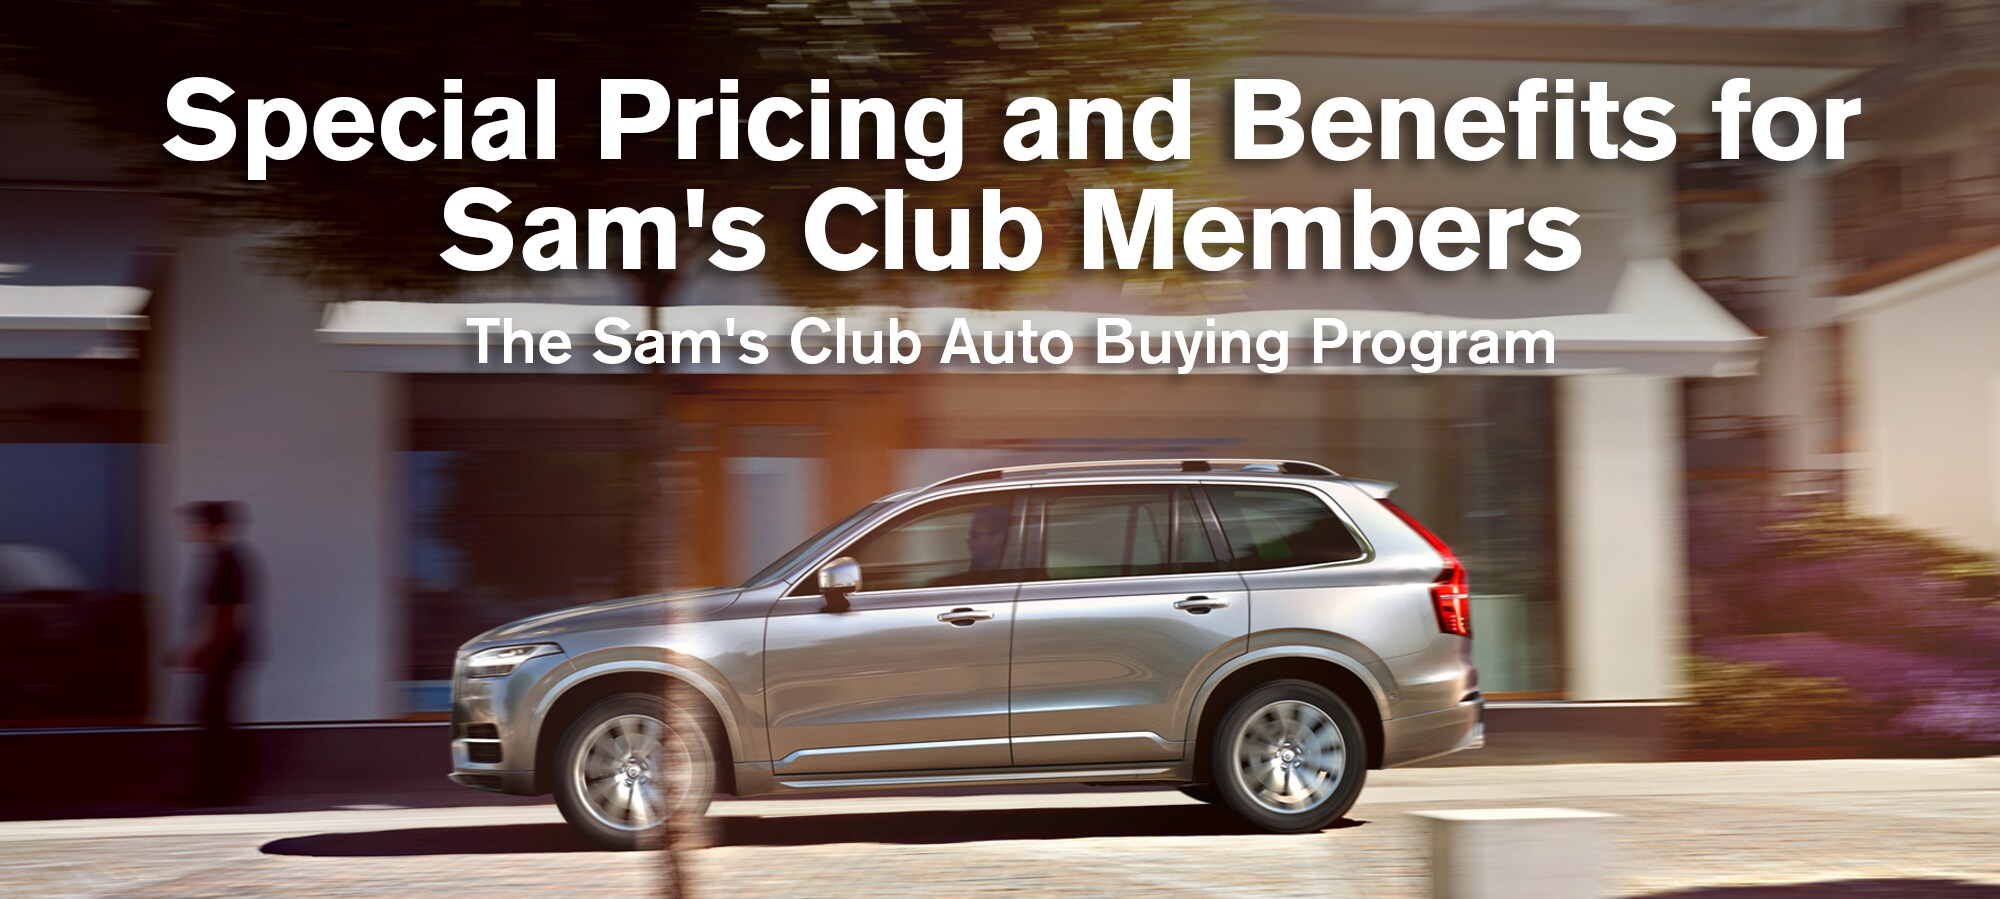 Sam s Club Auto Buying Program Gunther Volvo Cars Delray Beach